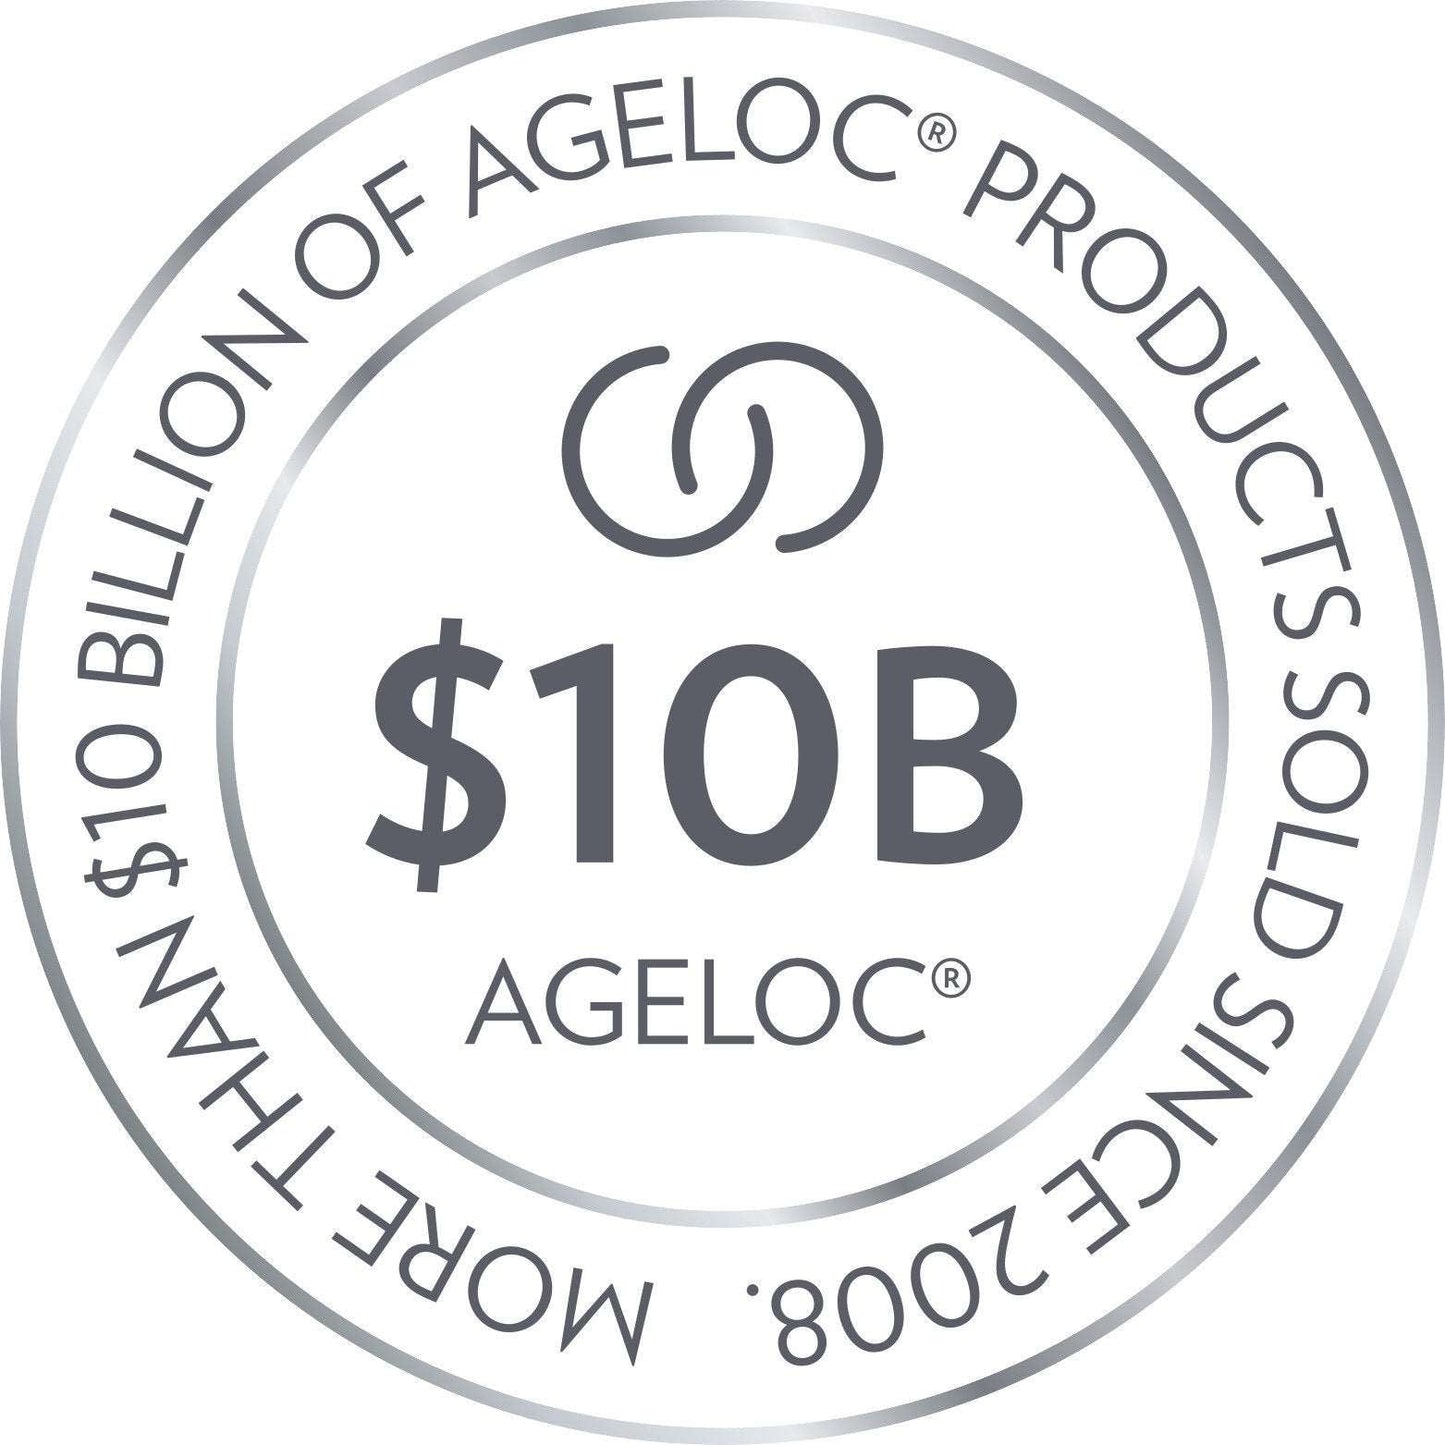 Nu Skin ageLOC serie meer dan 10 biljoen USD verkocht